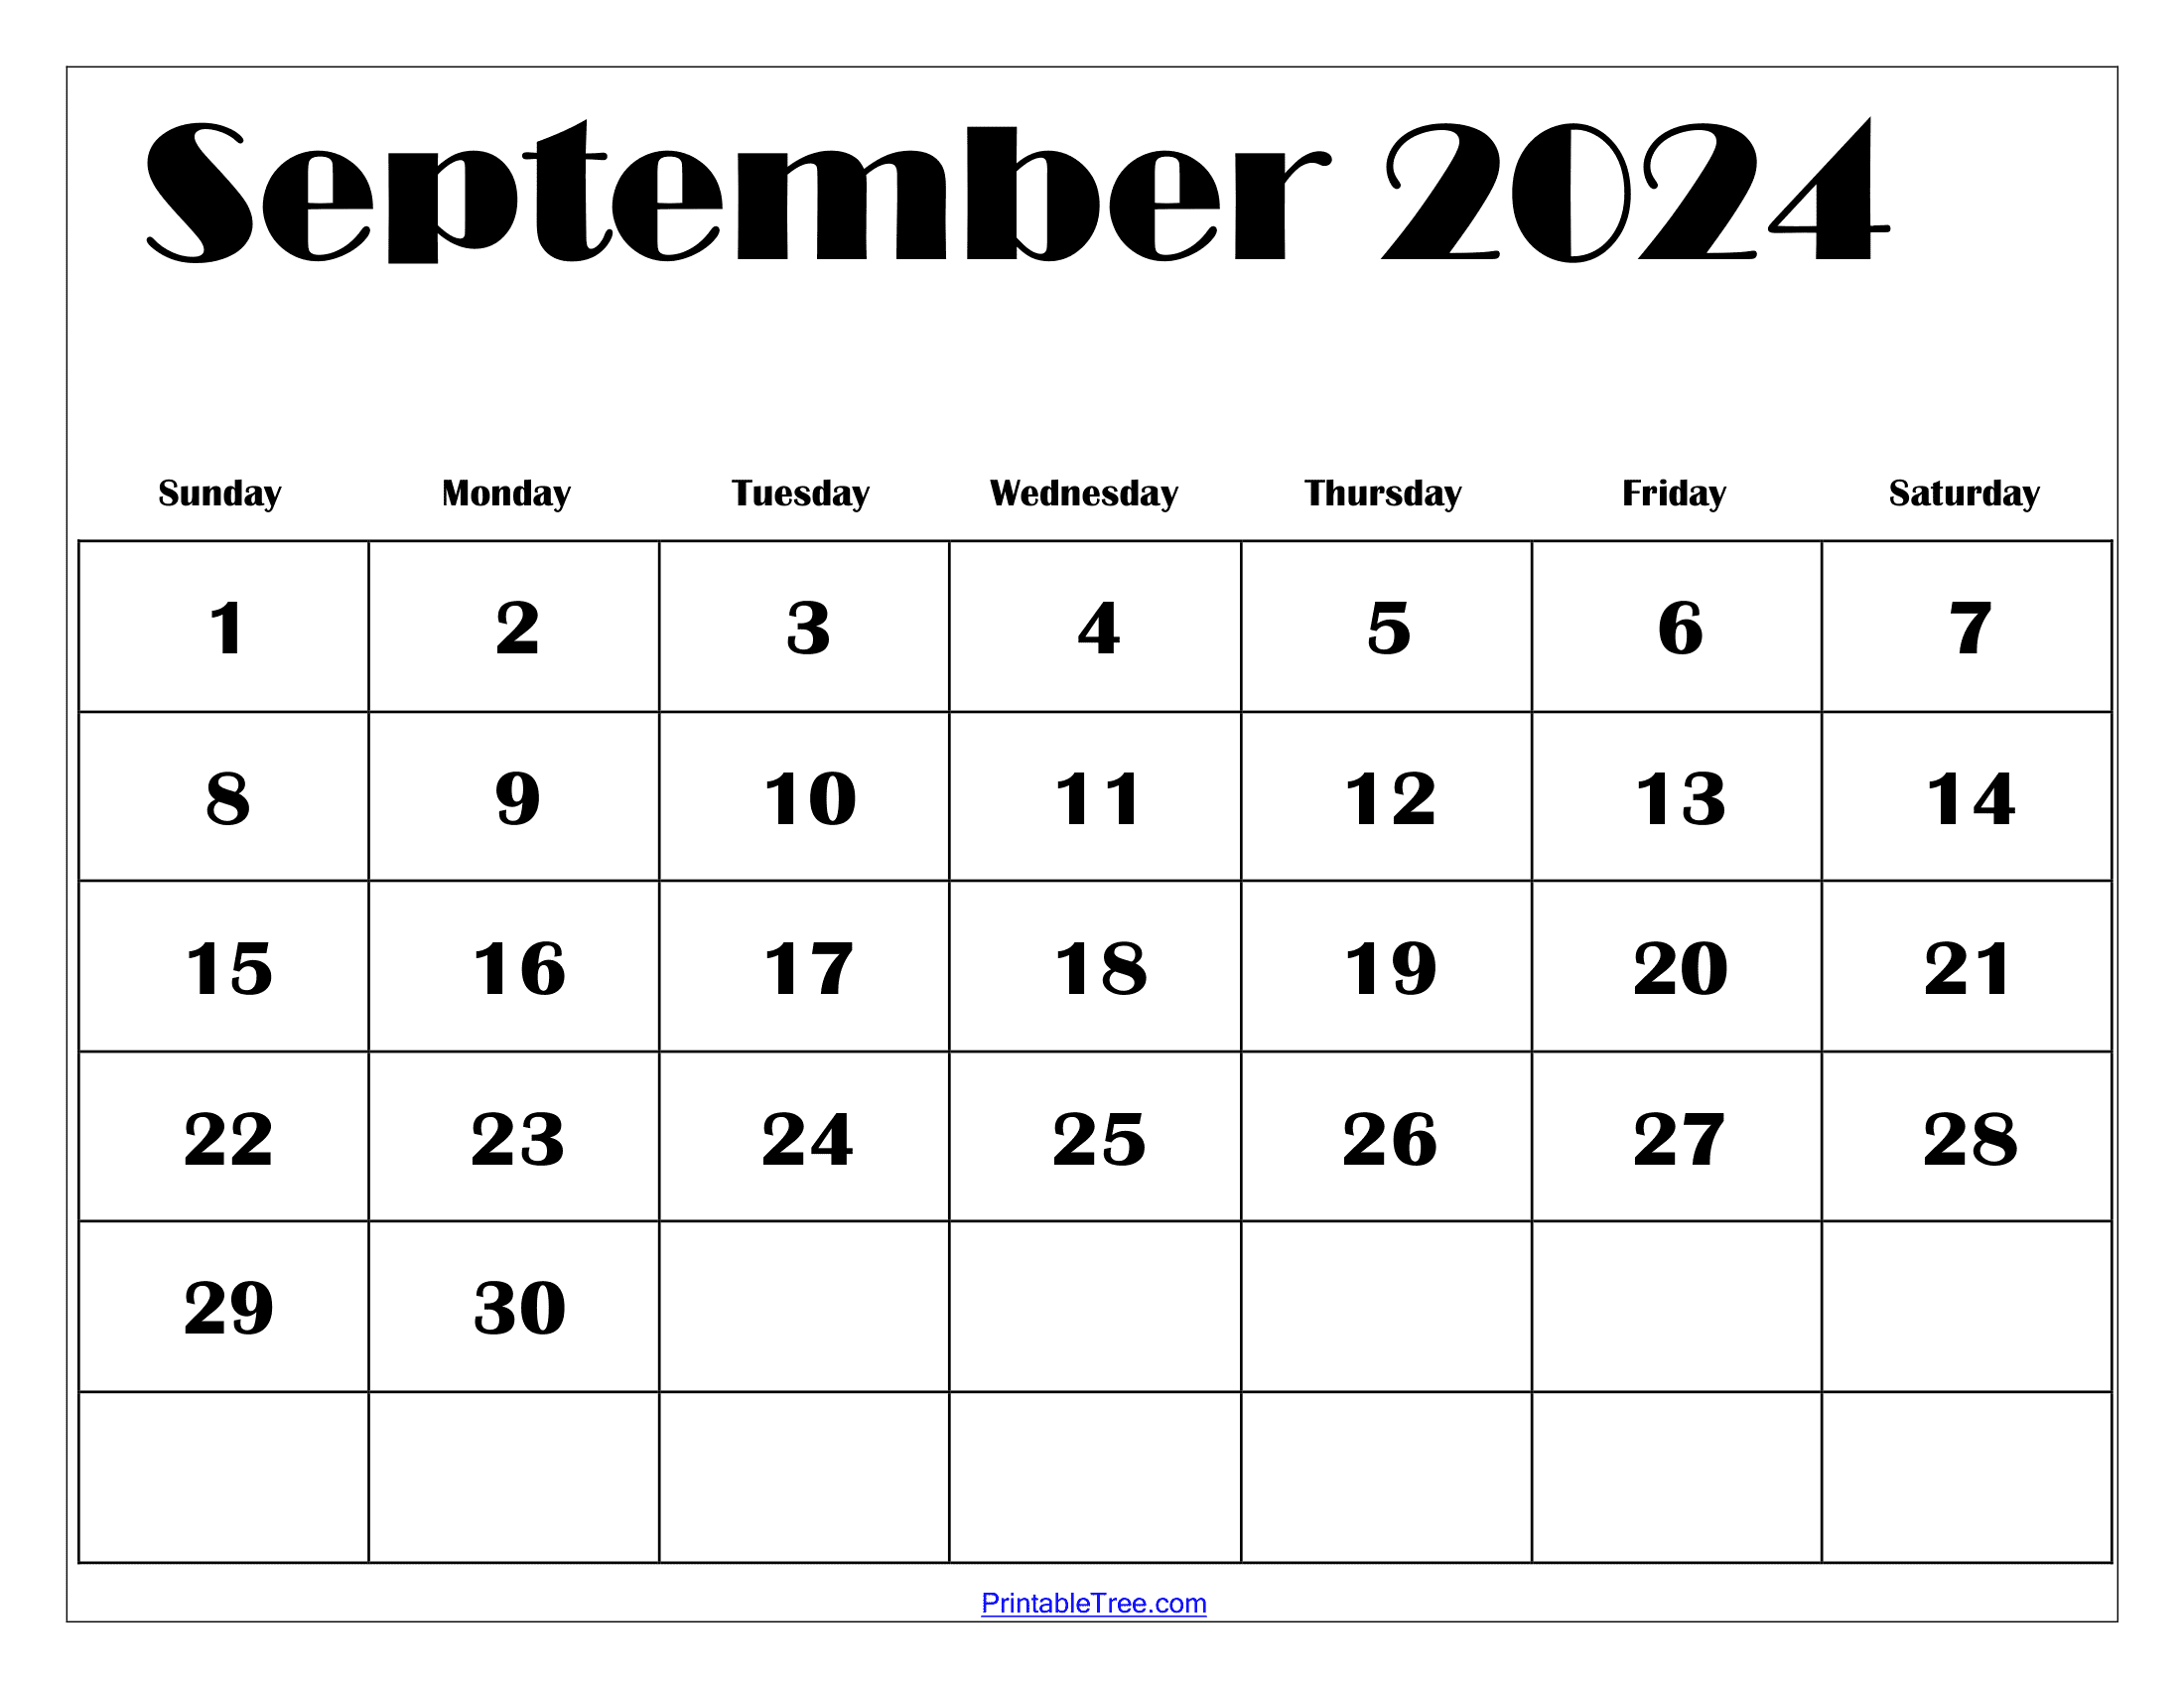 September 2024 Calendar Printable Pdf With Holidays for Sept 2024 Printable Calendar